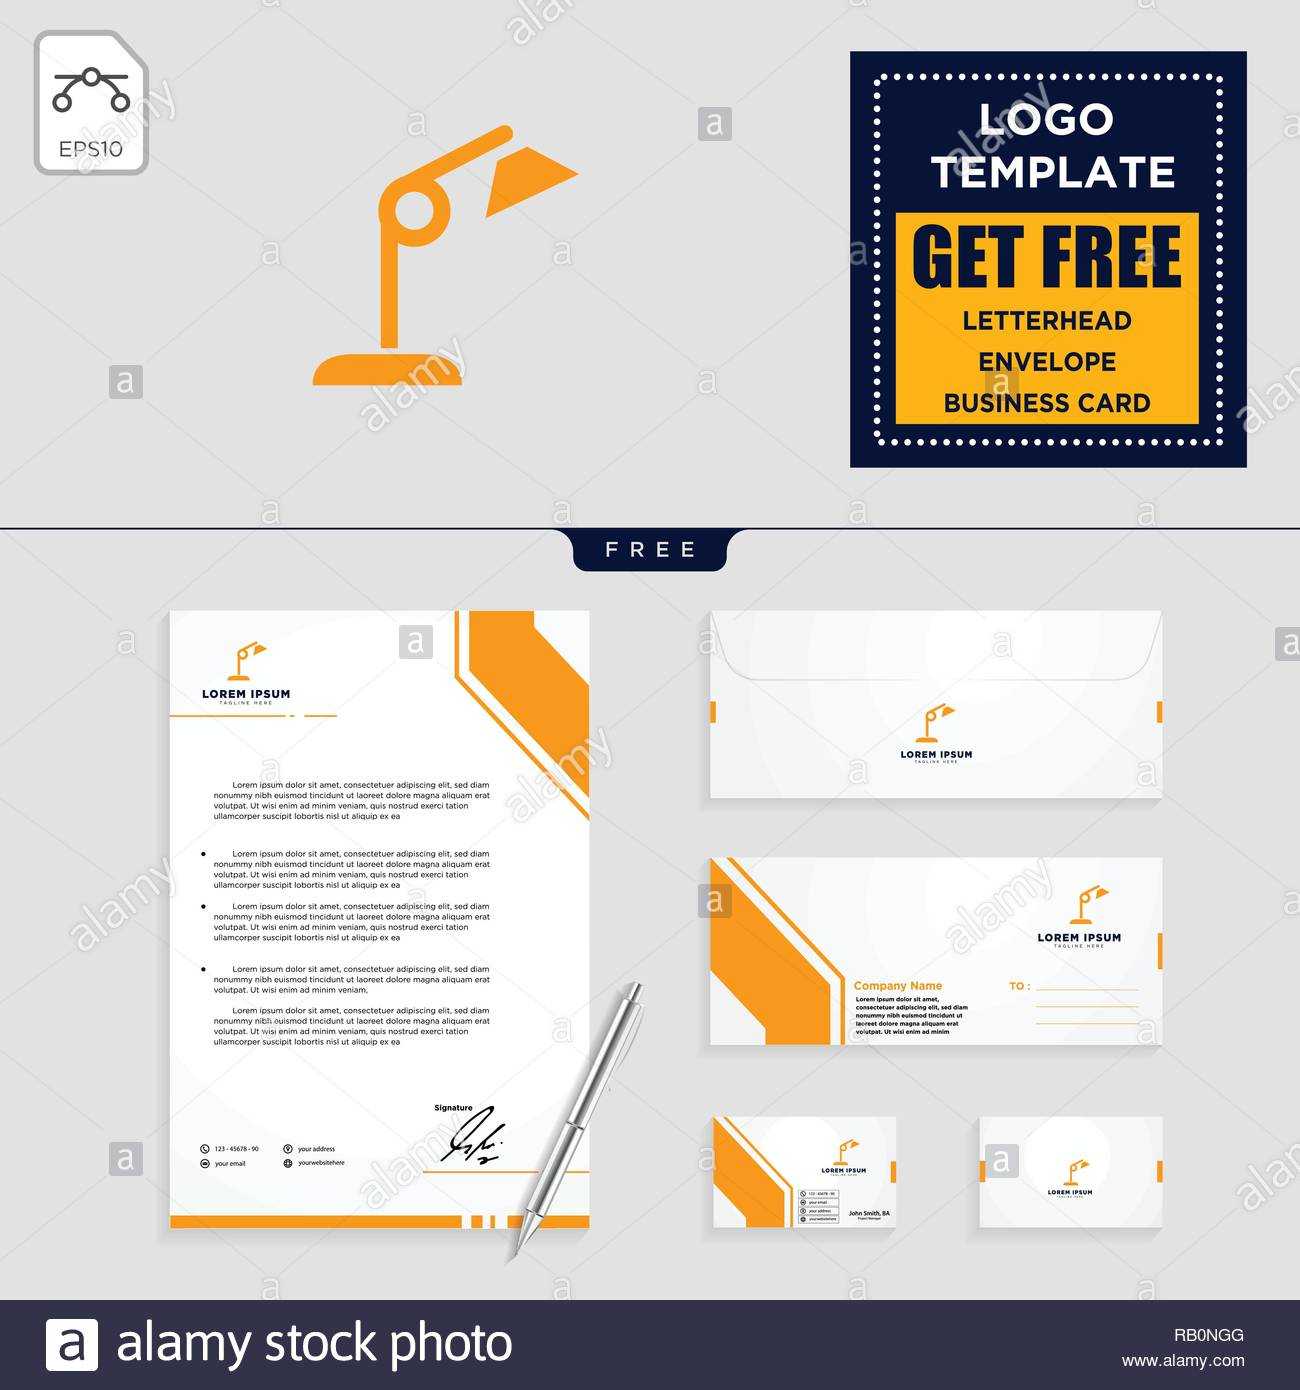 Light Interior Logo Template, Vector Illustration And For Business Card Letterhead Envelope Template